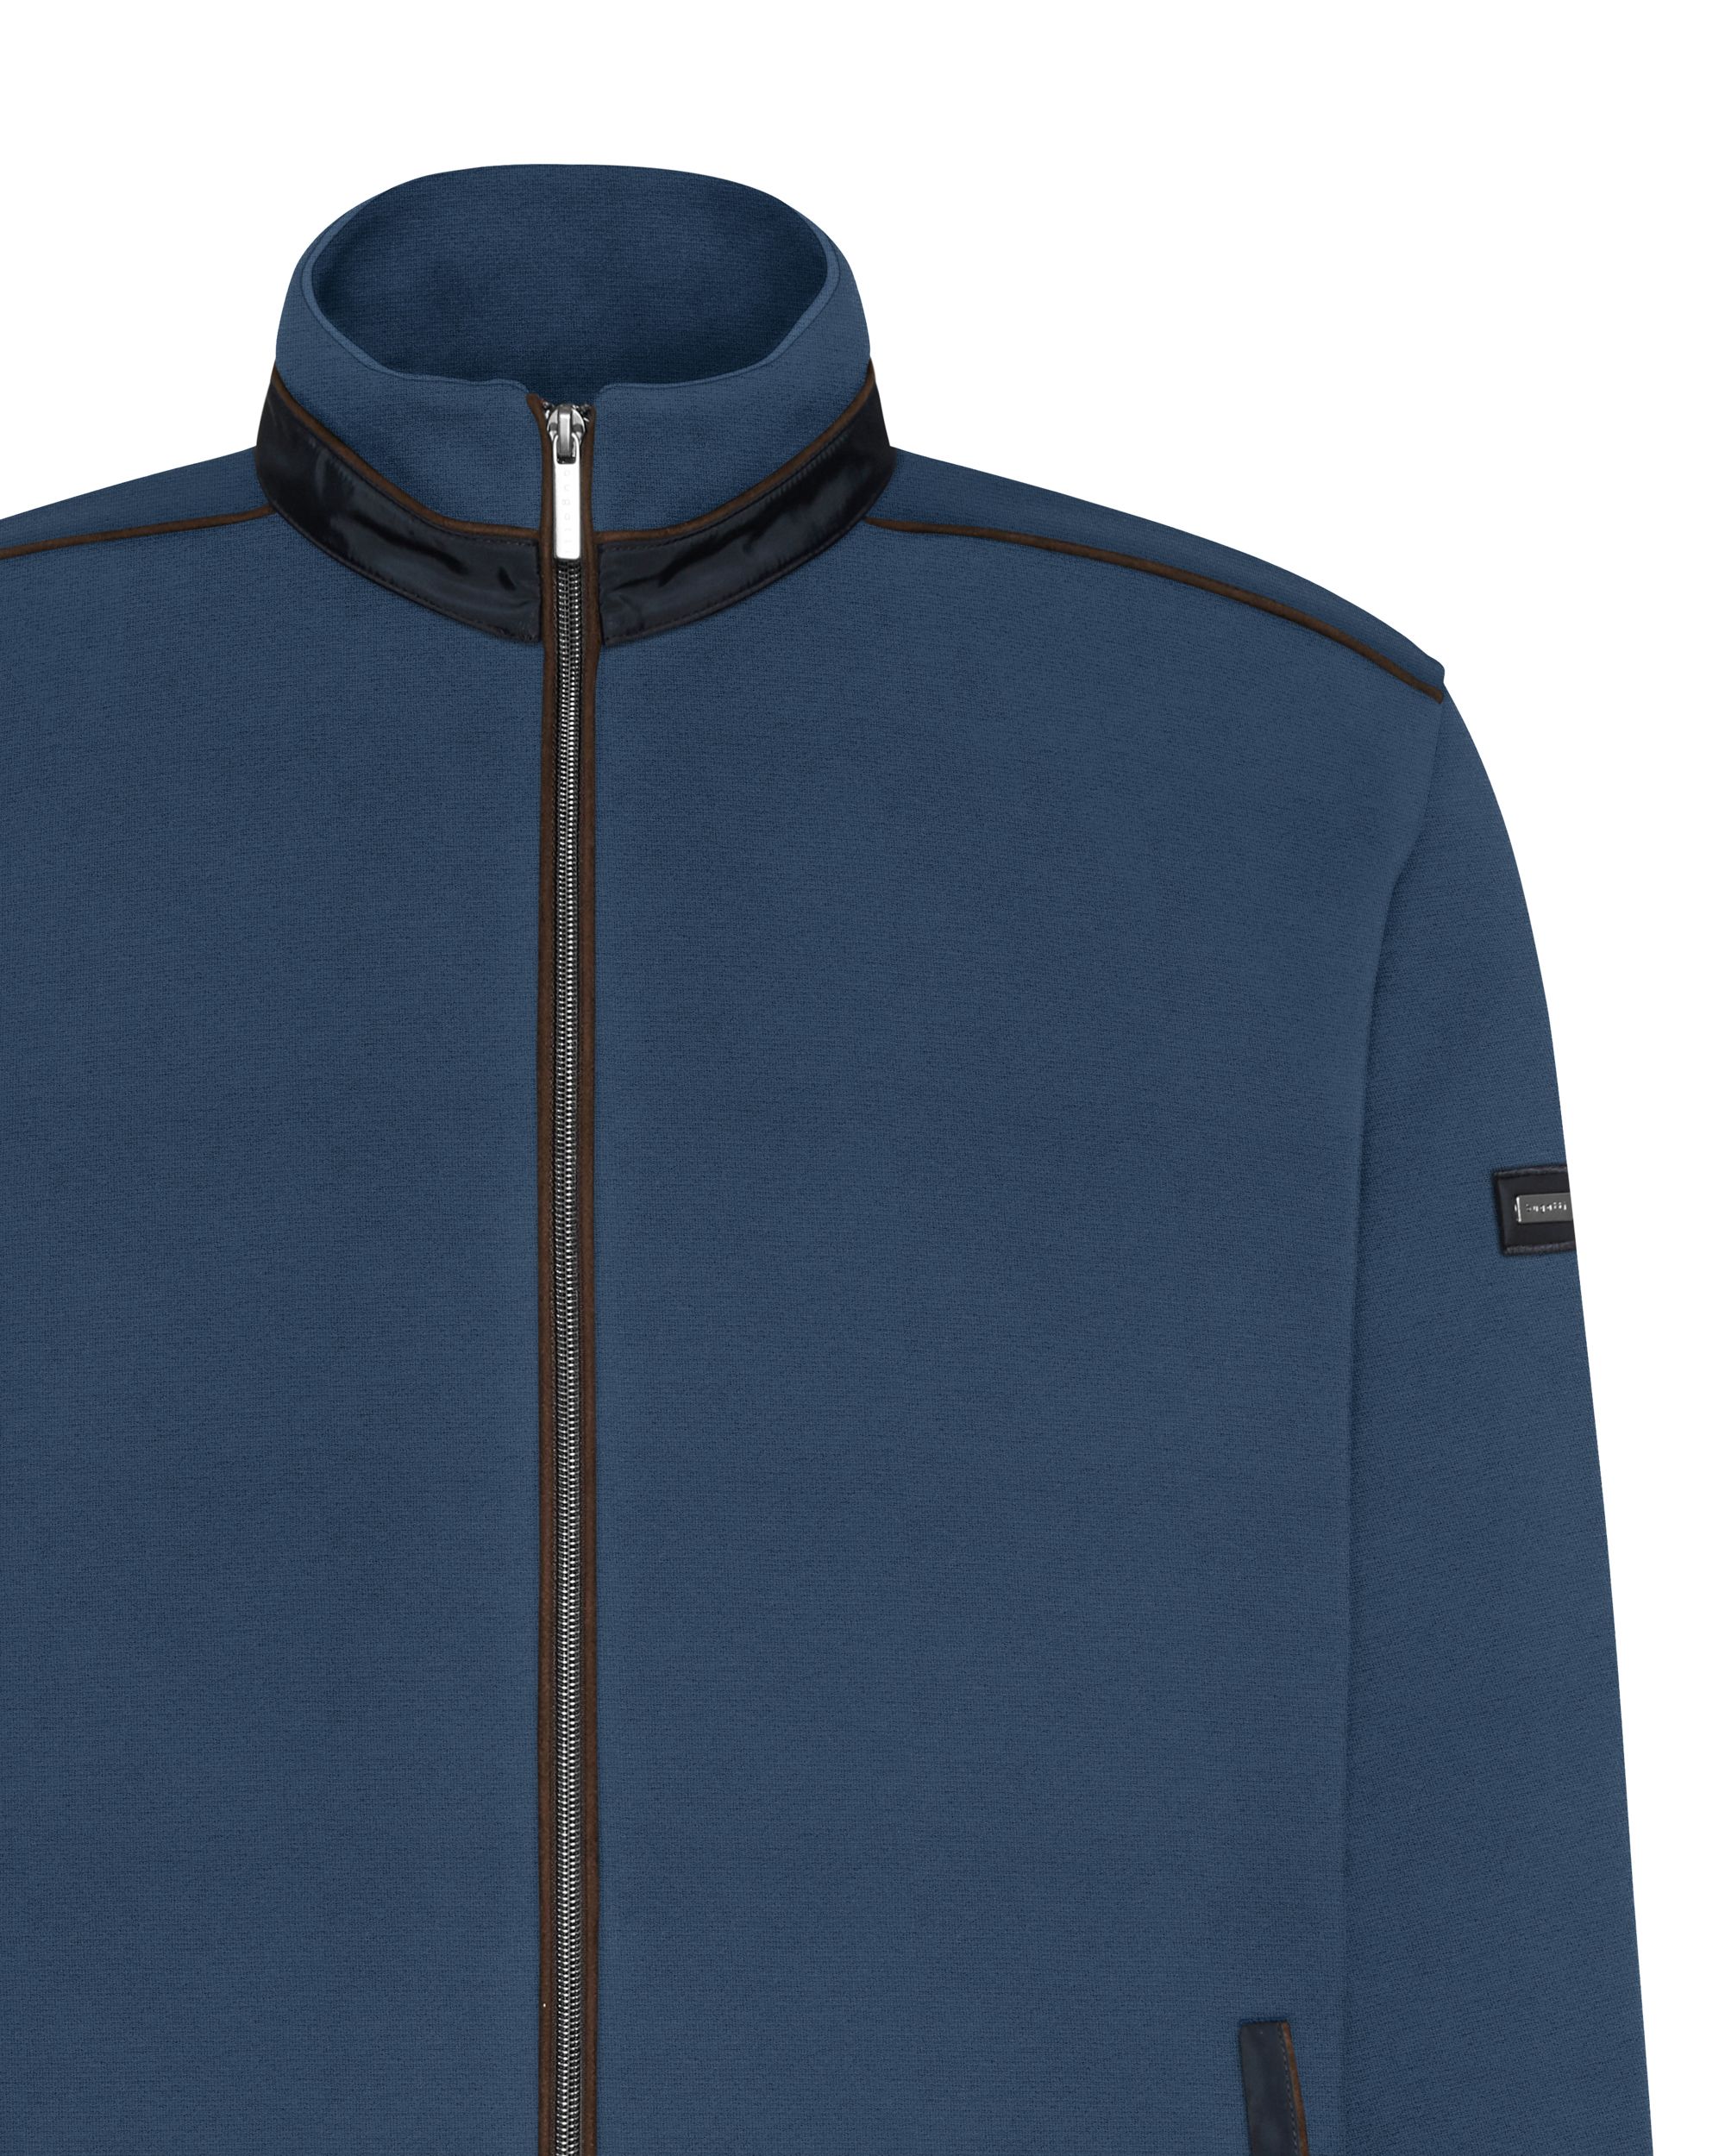 Bugatti clothing Vest Donker blauw 090450-001-L